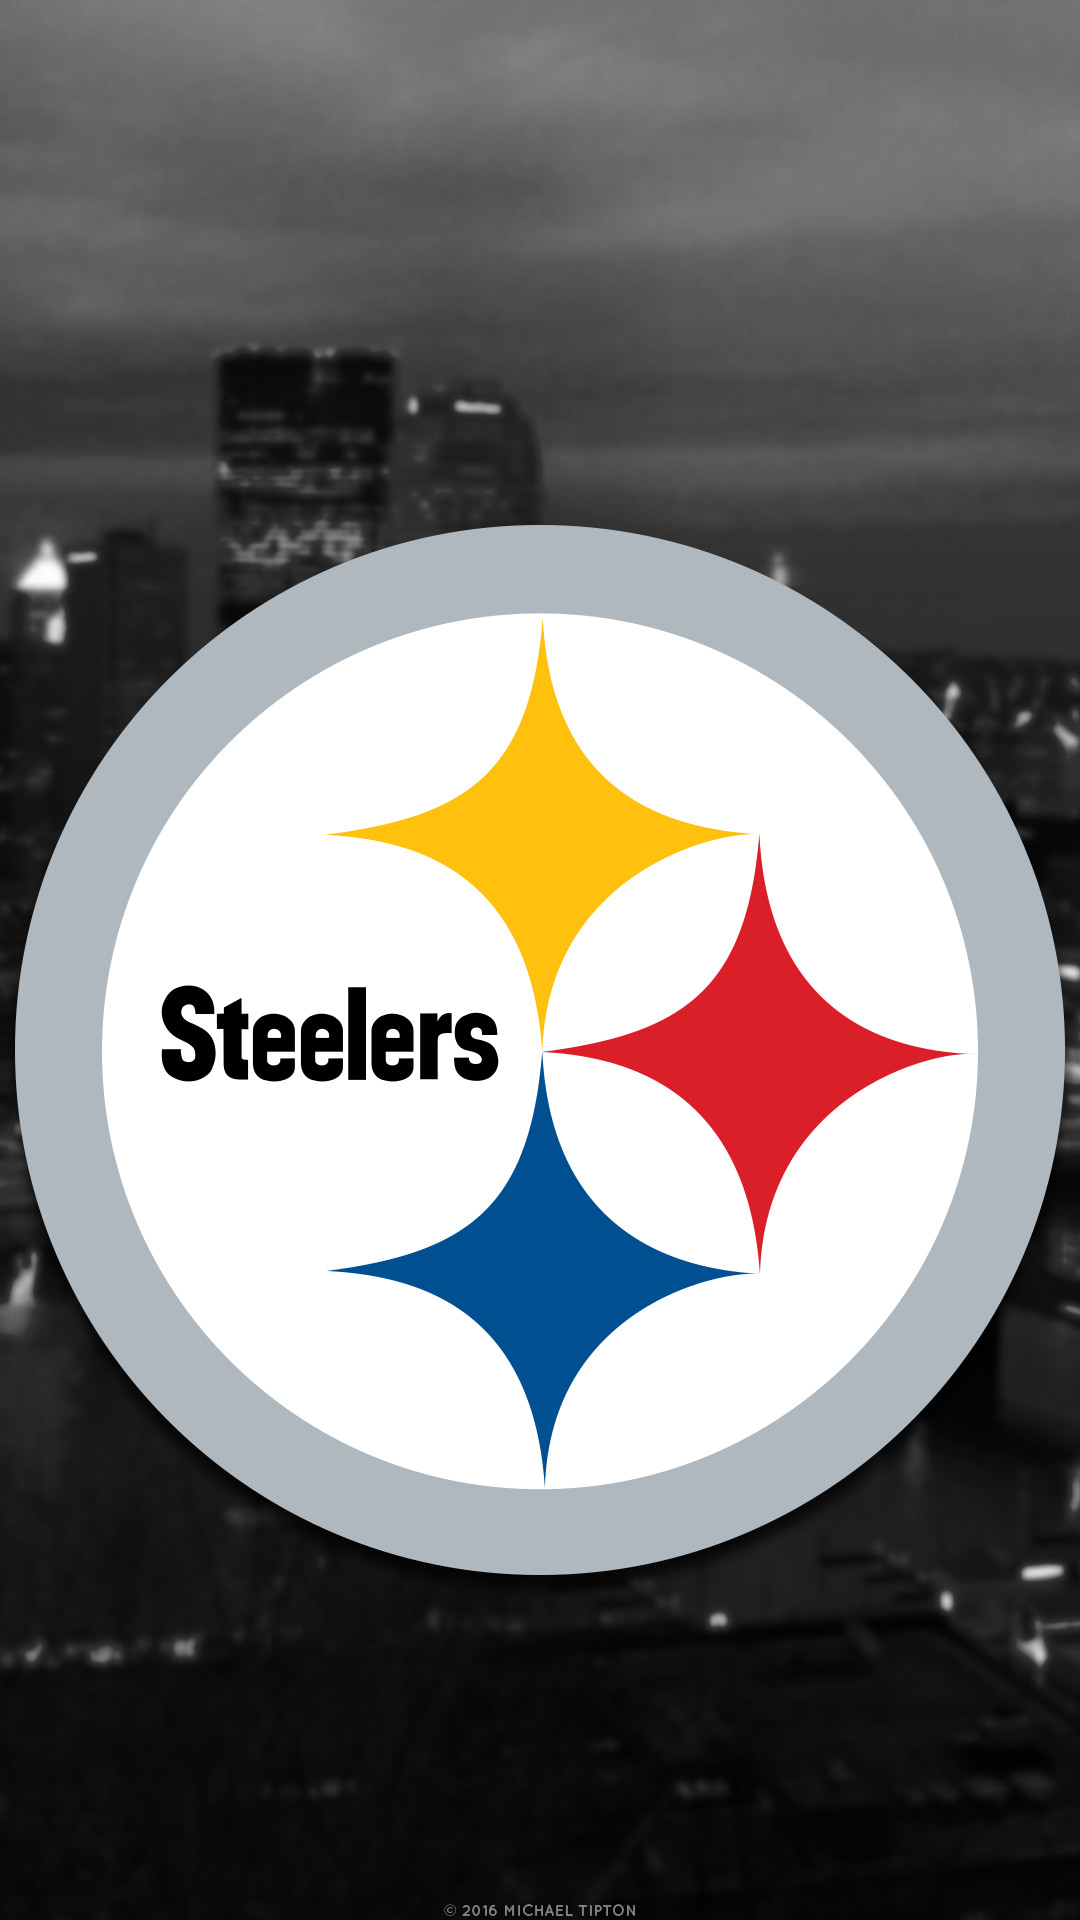 1080x1920 ... galaxy Pittsburgh Steelers city 2017 logo wallpaper free iphone 5, 6,  7, galaxy s6